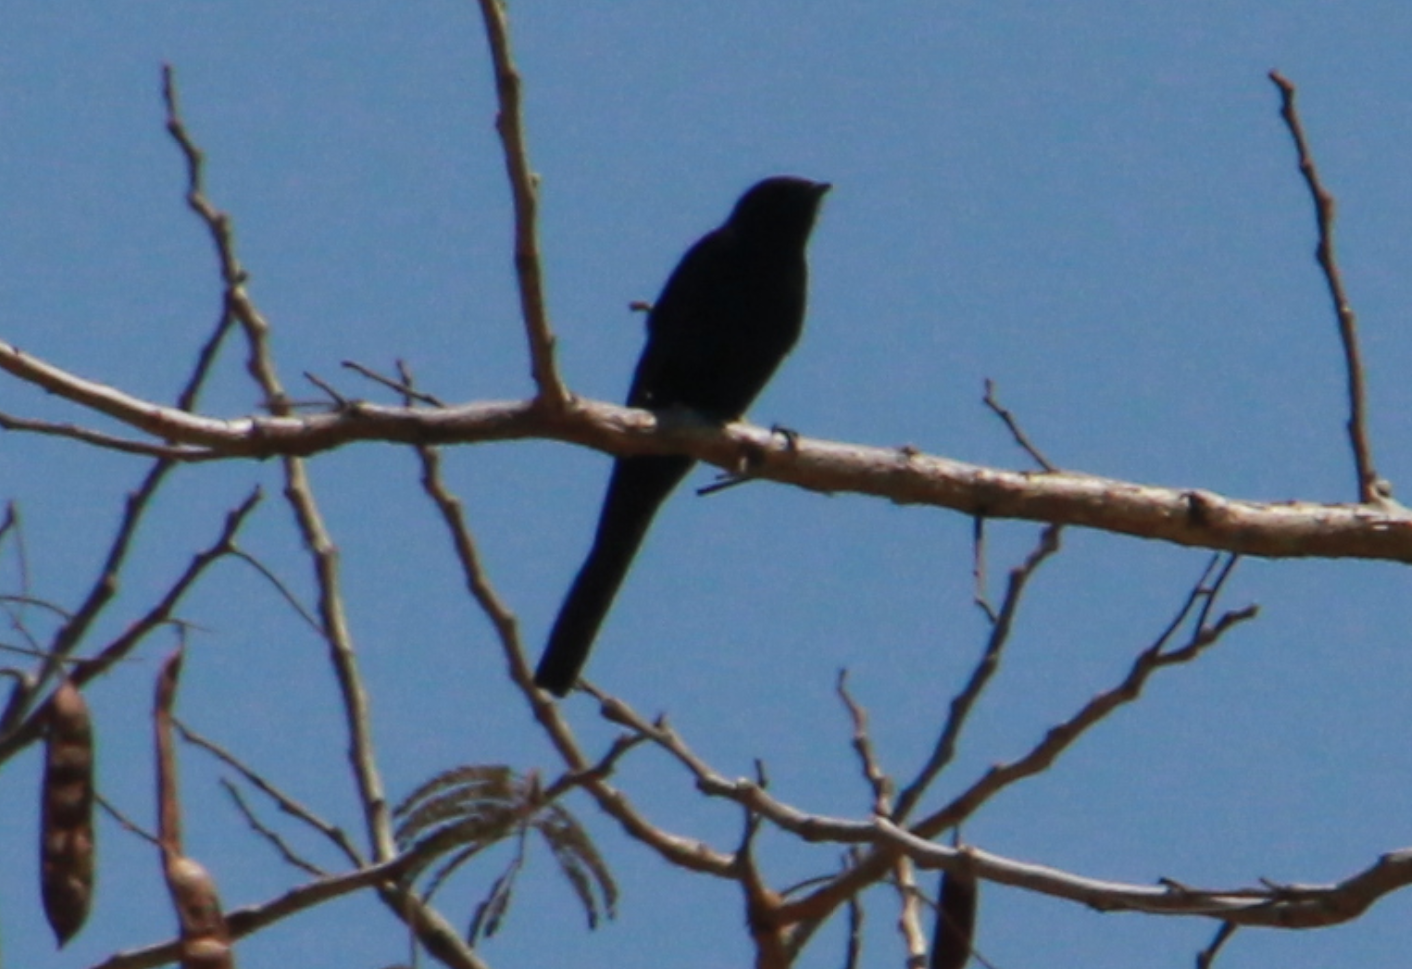 Zimbabwe - Black Bird Long Tail - Pic 1 - Copy.PNG